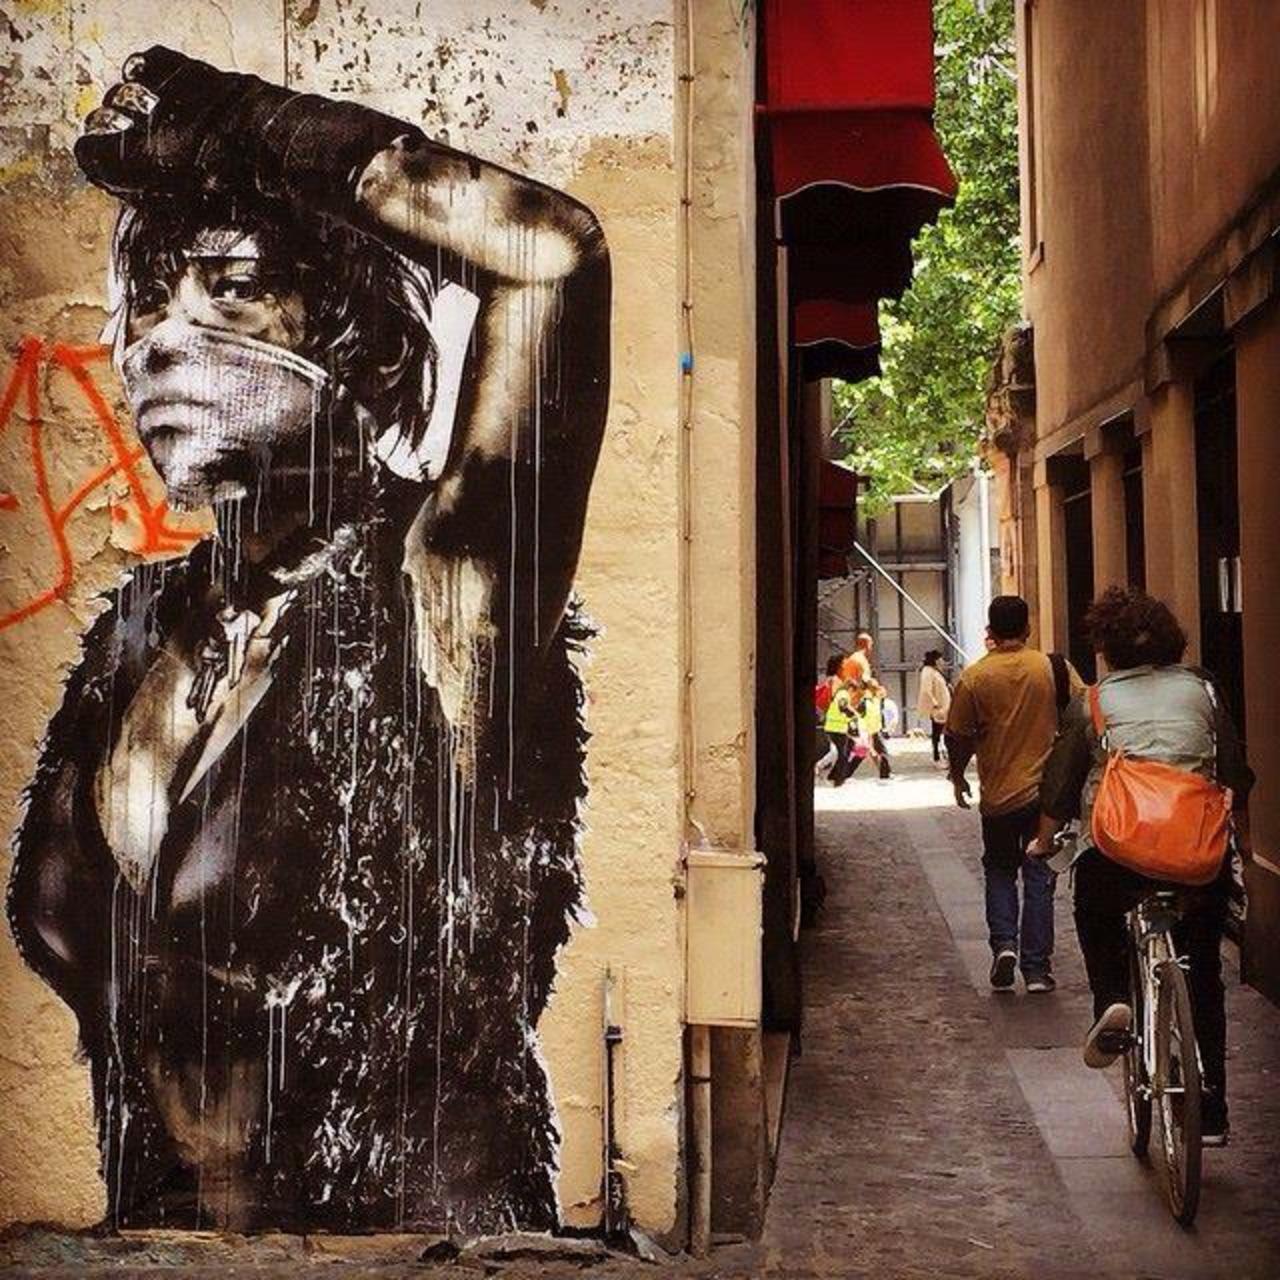 RT @GoogleStreetArt: Street Art by Eddie Colla in Paris 

#art #arte #graffiti #streetart http://t.co/gkccEZIl9b